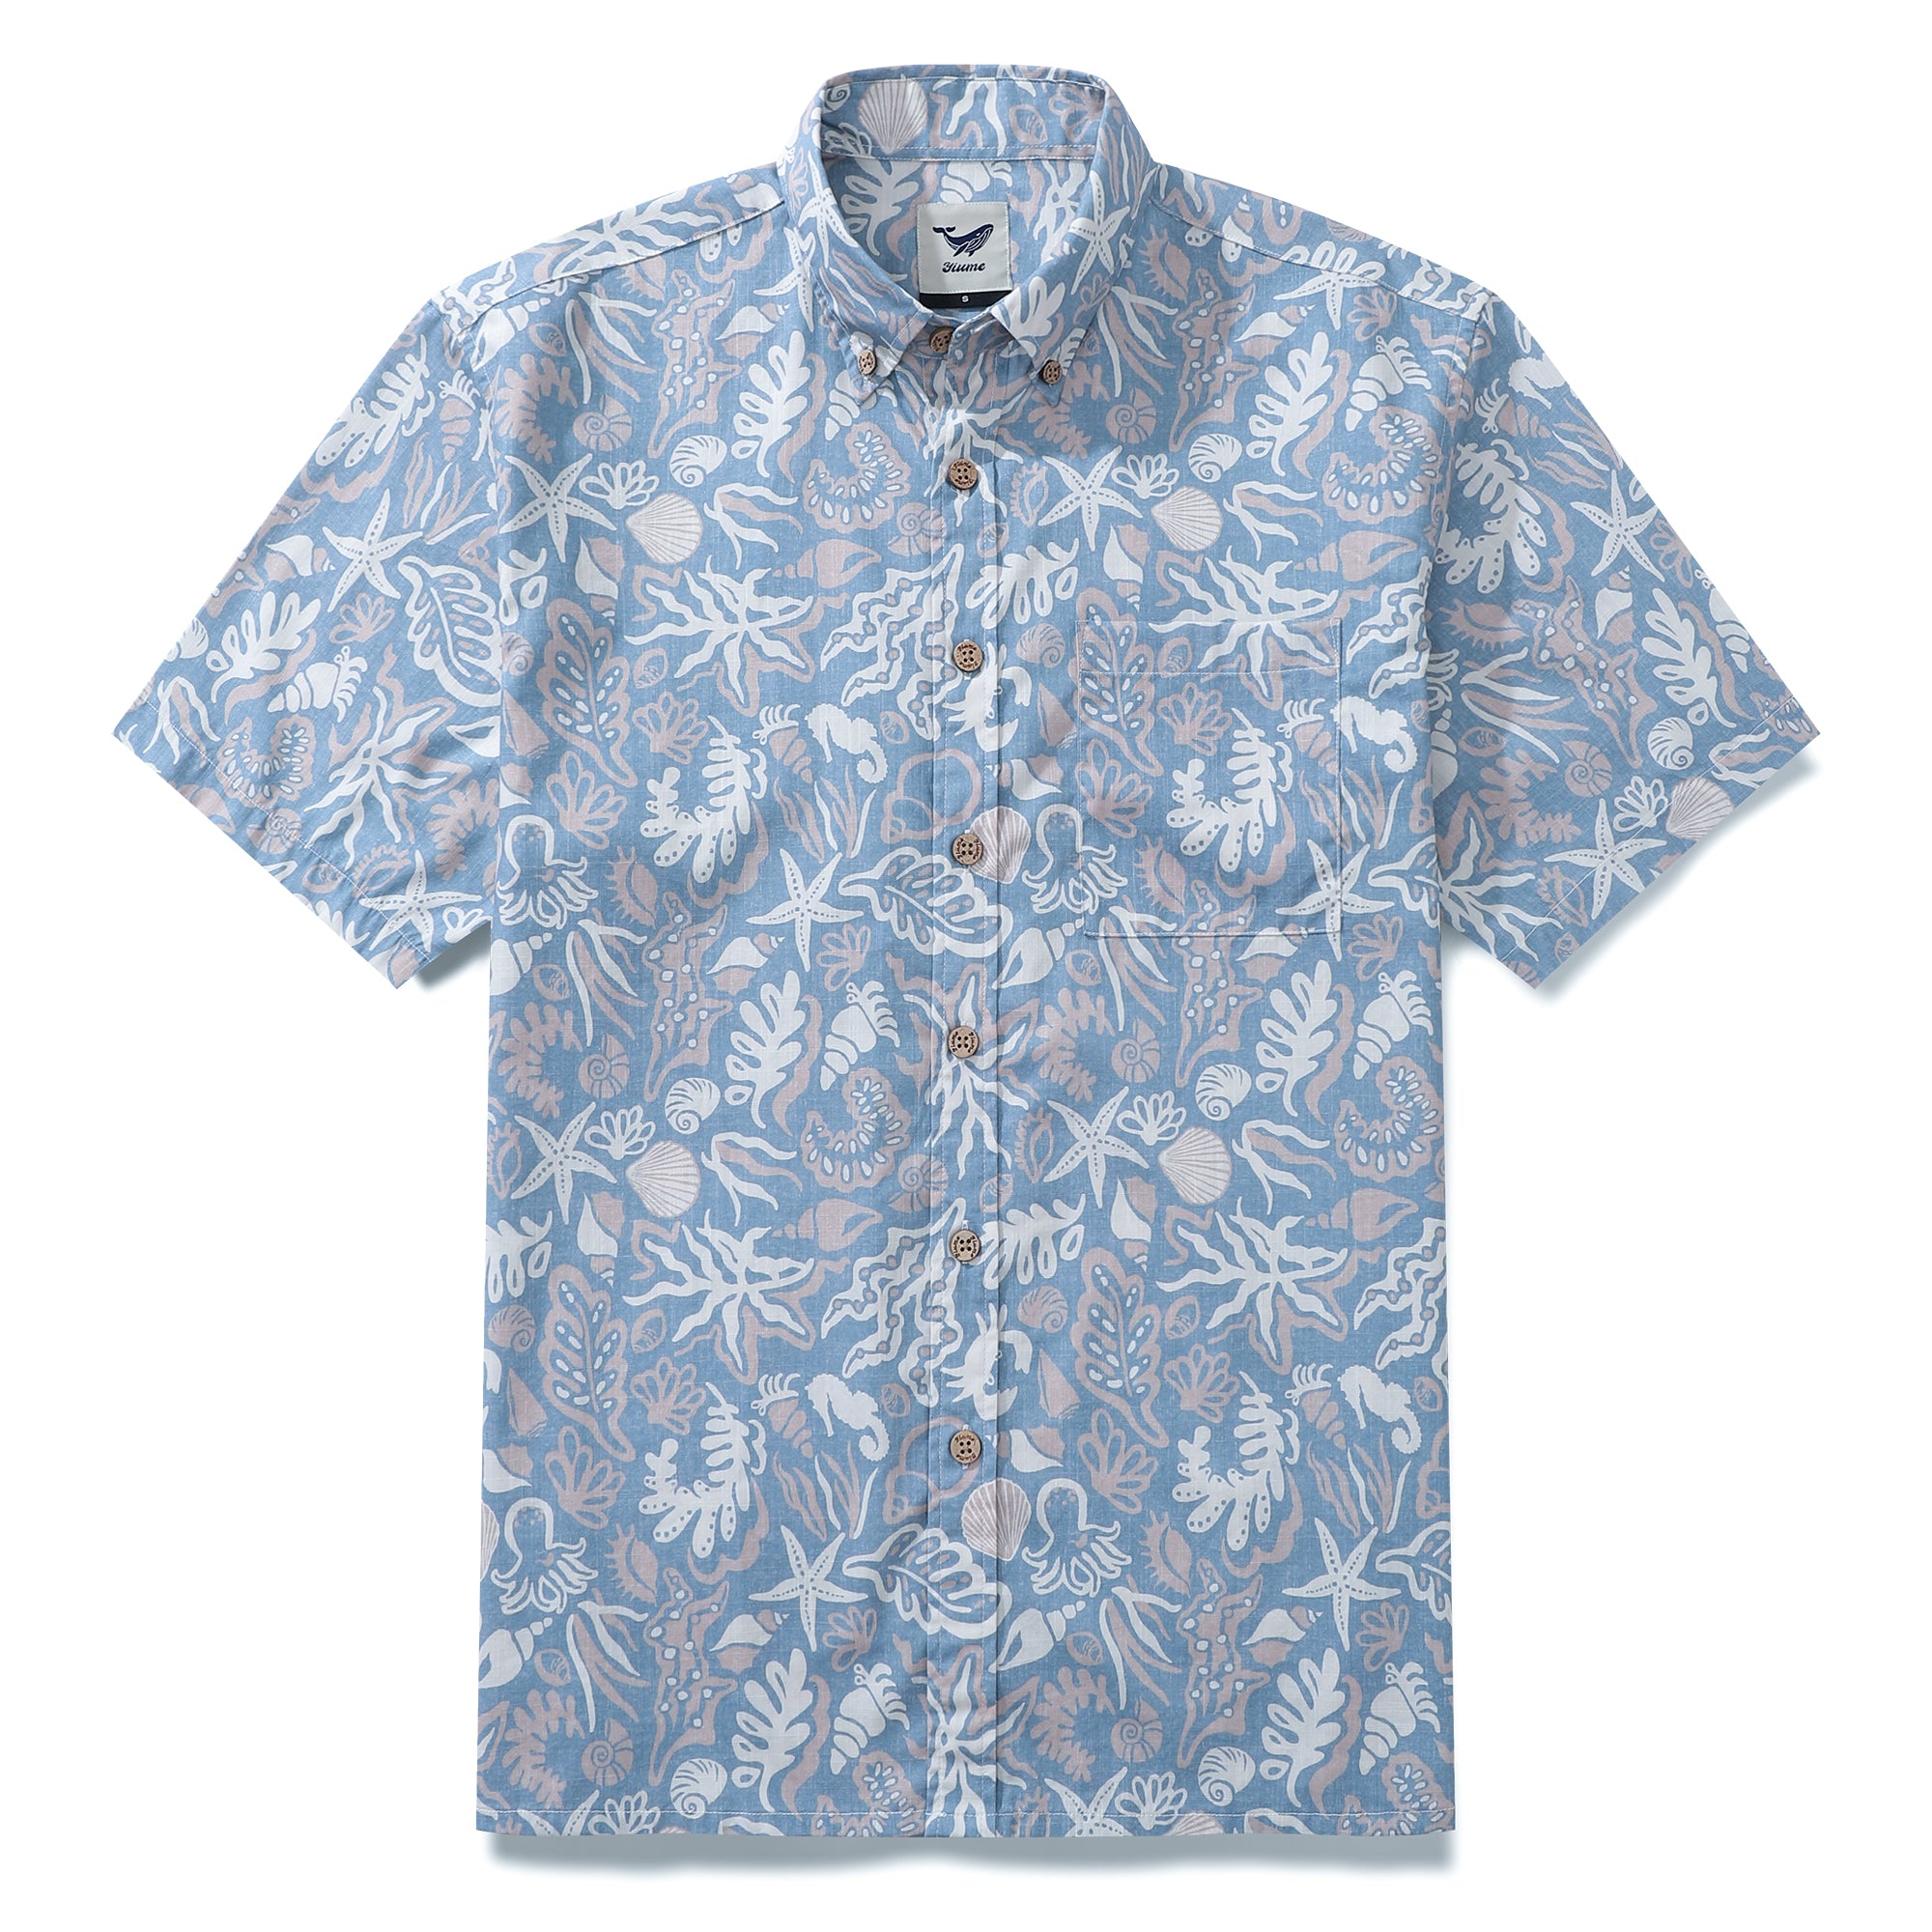 Mens Big and Tall Shirts 100% Cotton Hawaiian Shirts for Men Oceanic Print Short-Sleeved